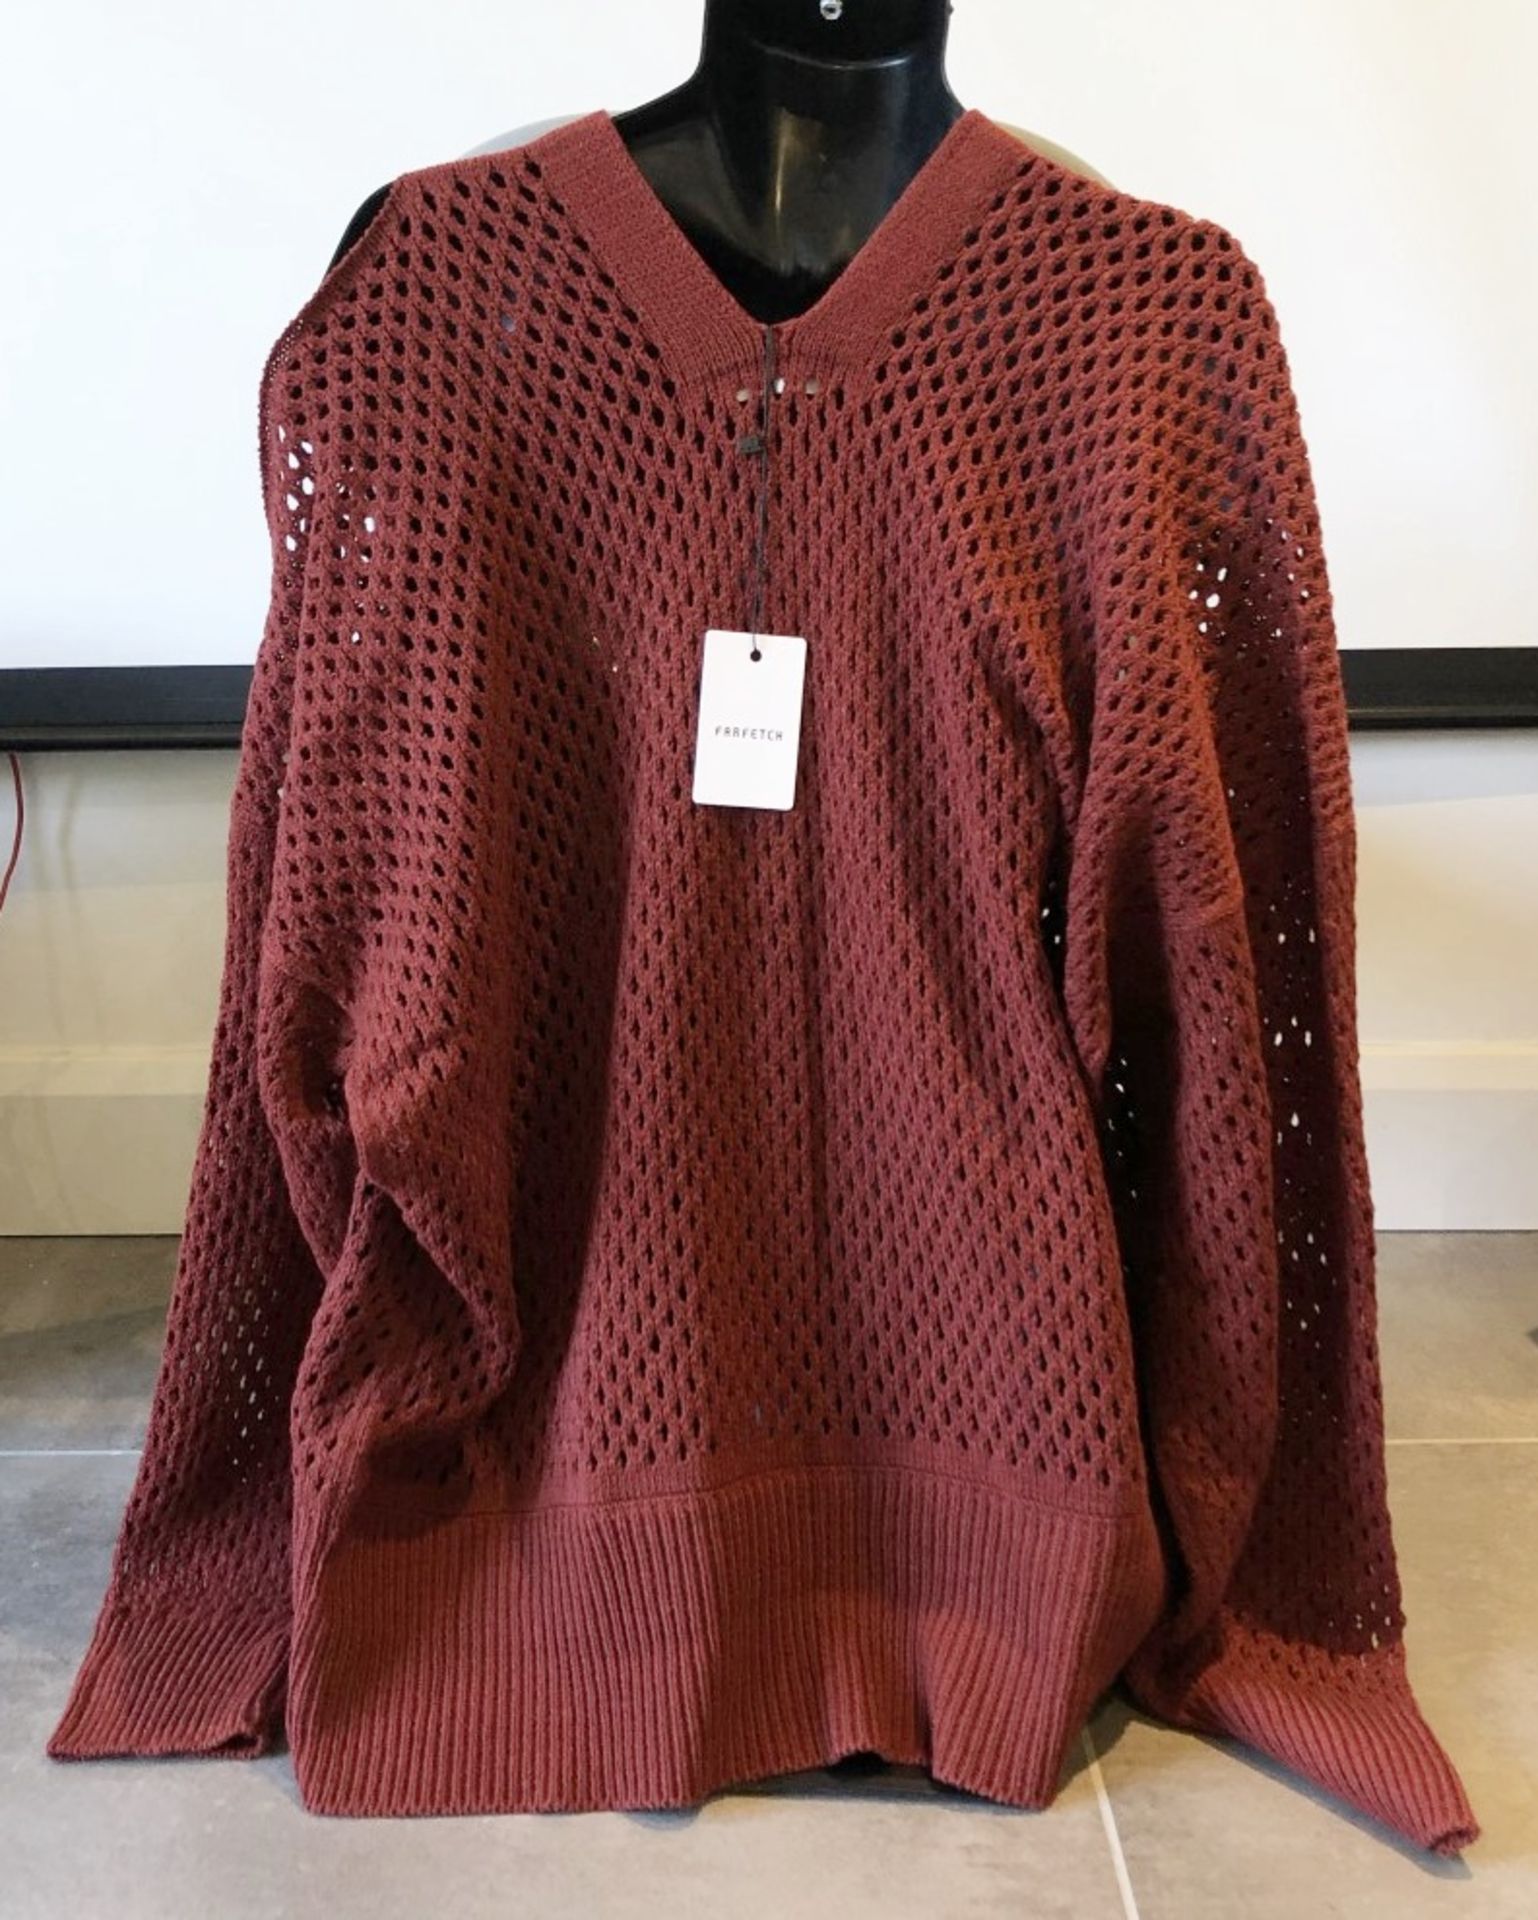 1 x Men's Genuine Sulvam Break Net Cardigan In Burgundy - Unworn With Tags - Original RRP £500.00 - Image 7 of 10